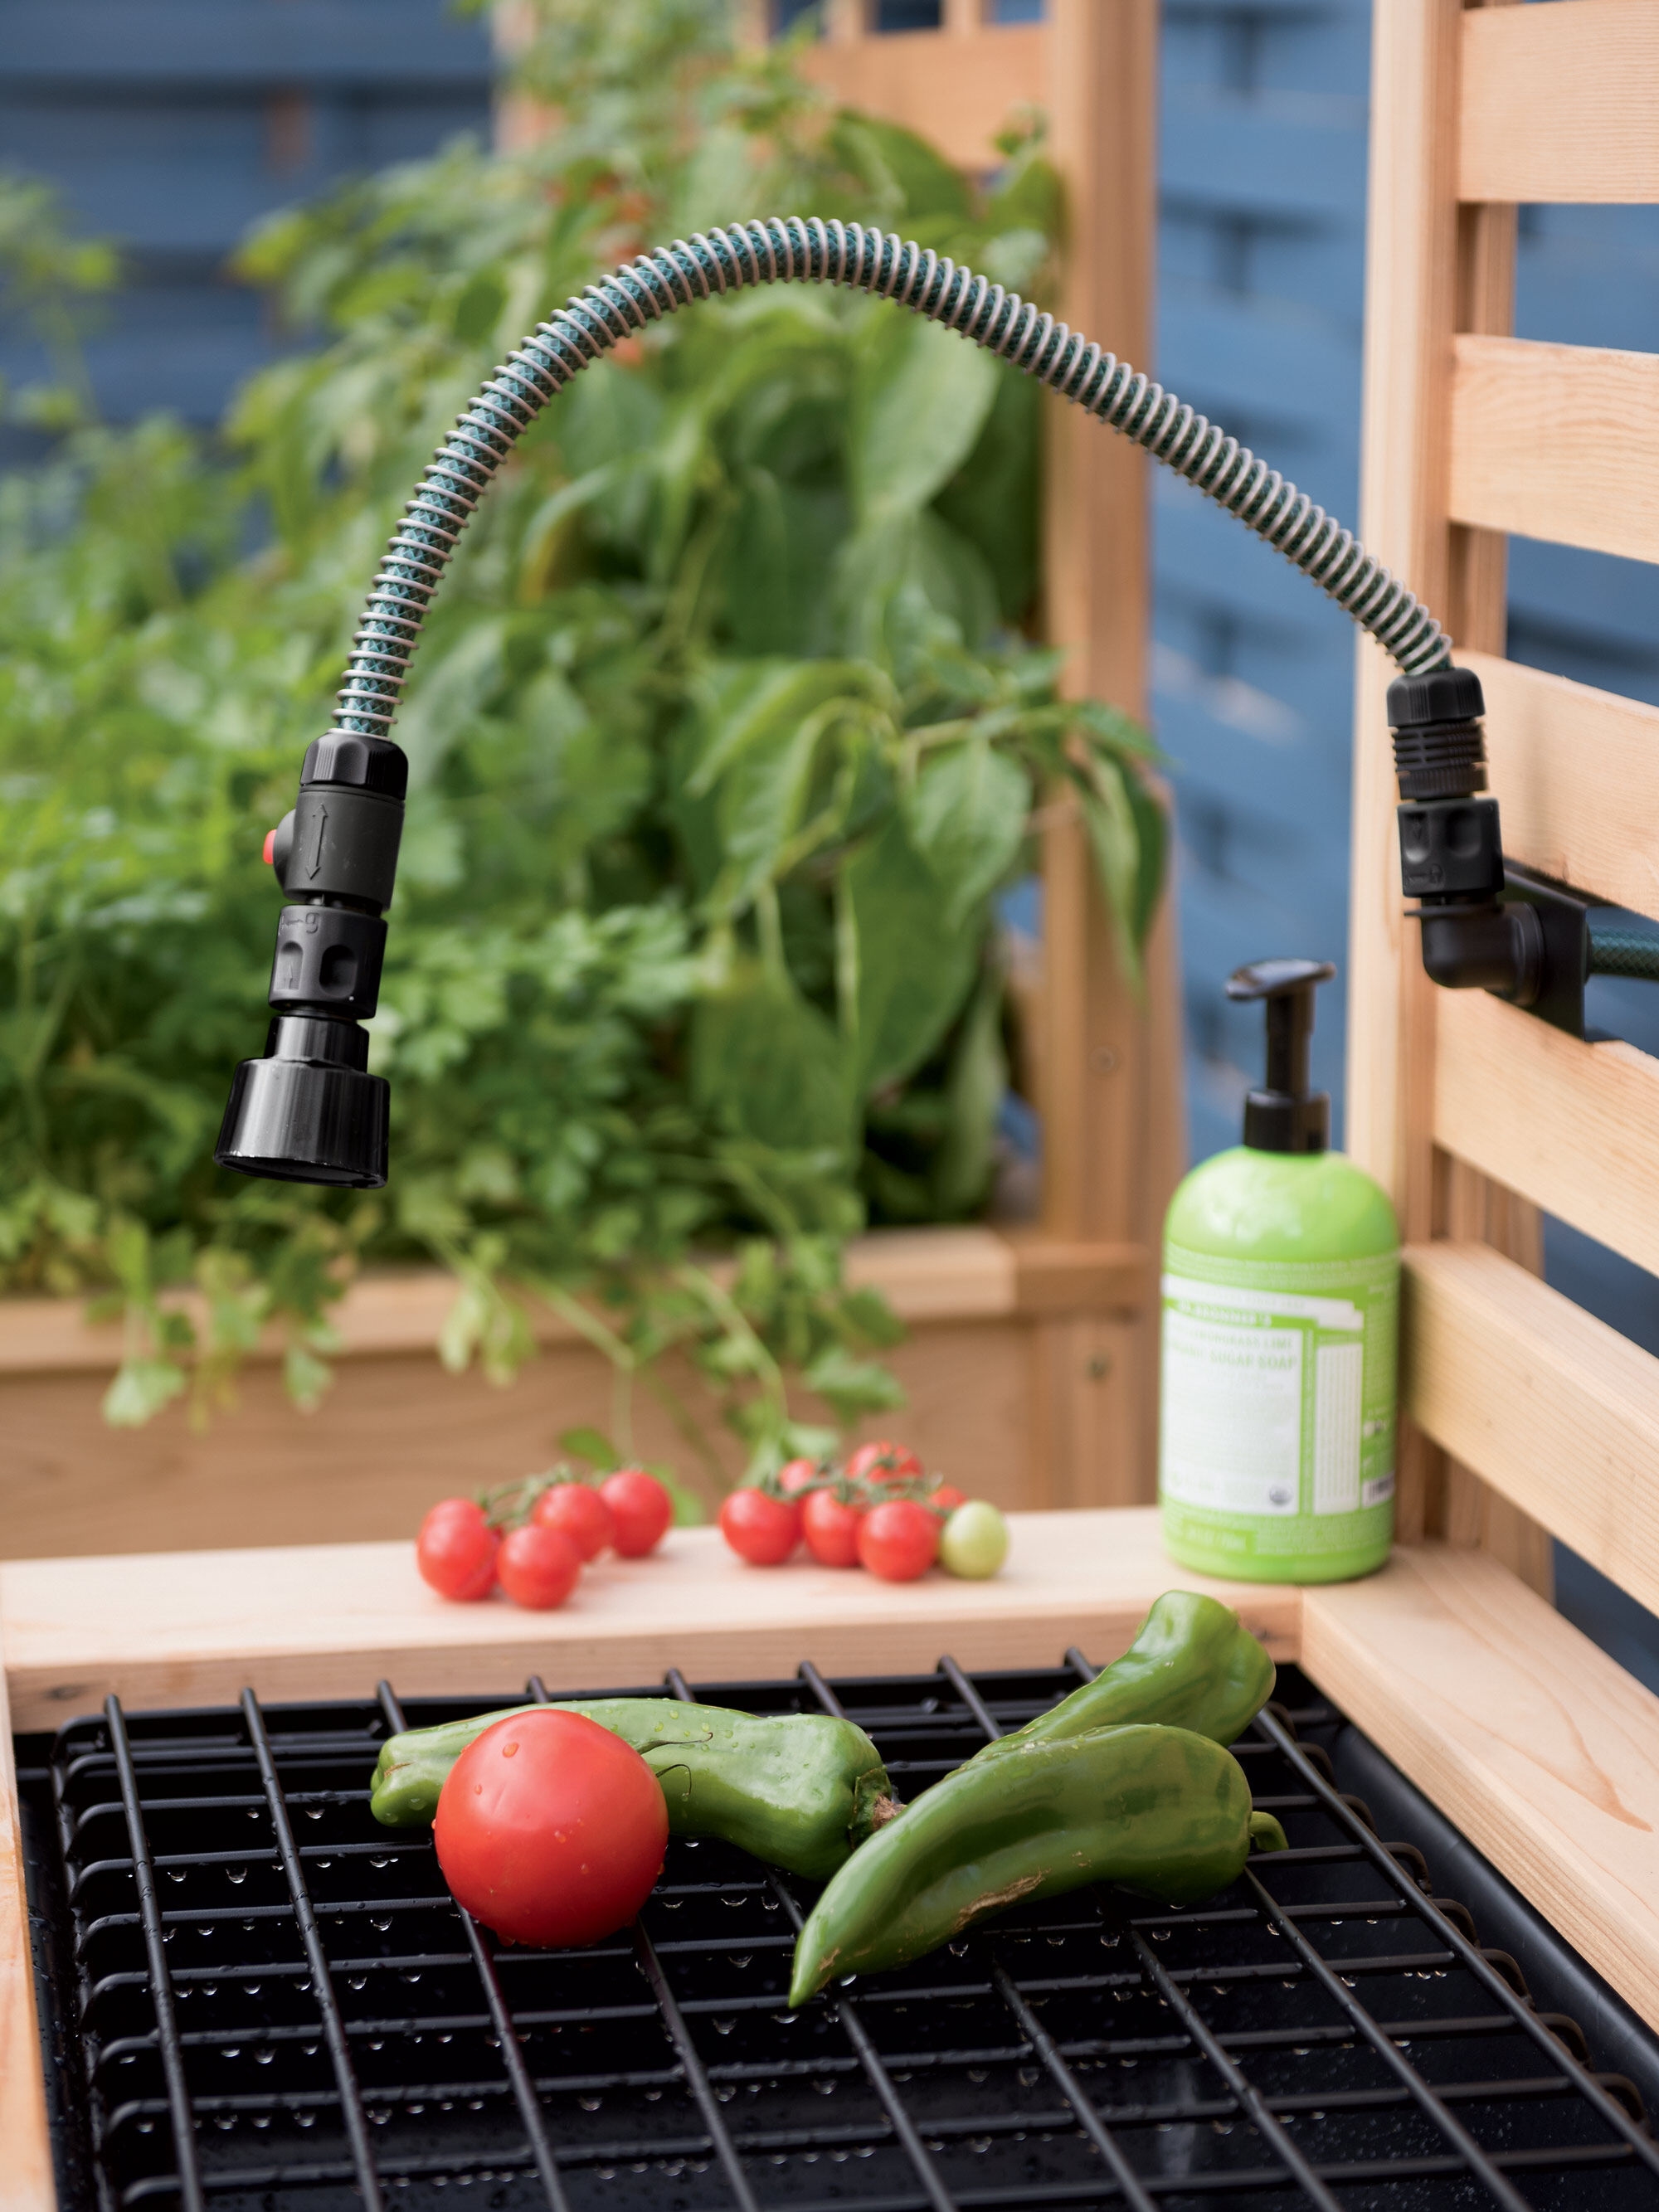 Garden Faucet +Hose Kit for Outdoor Potting Bench Sink | Gardeners.com